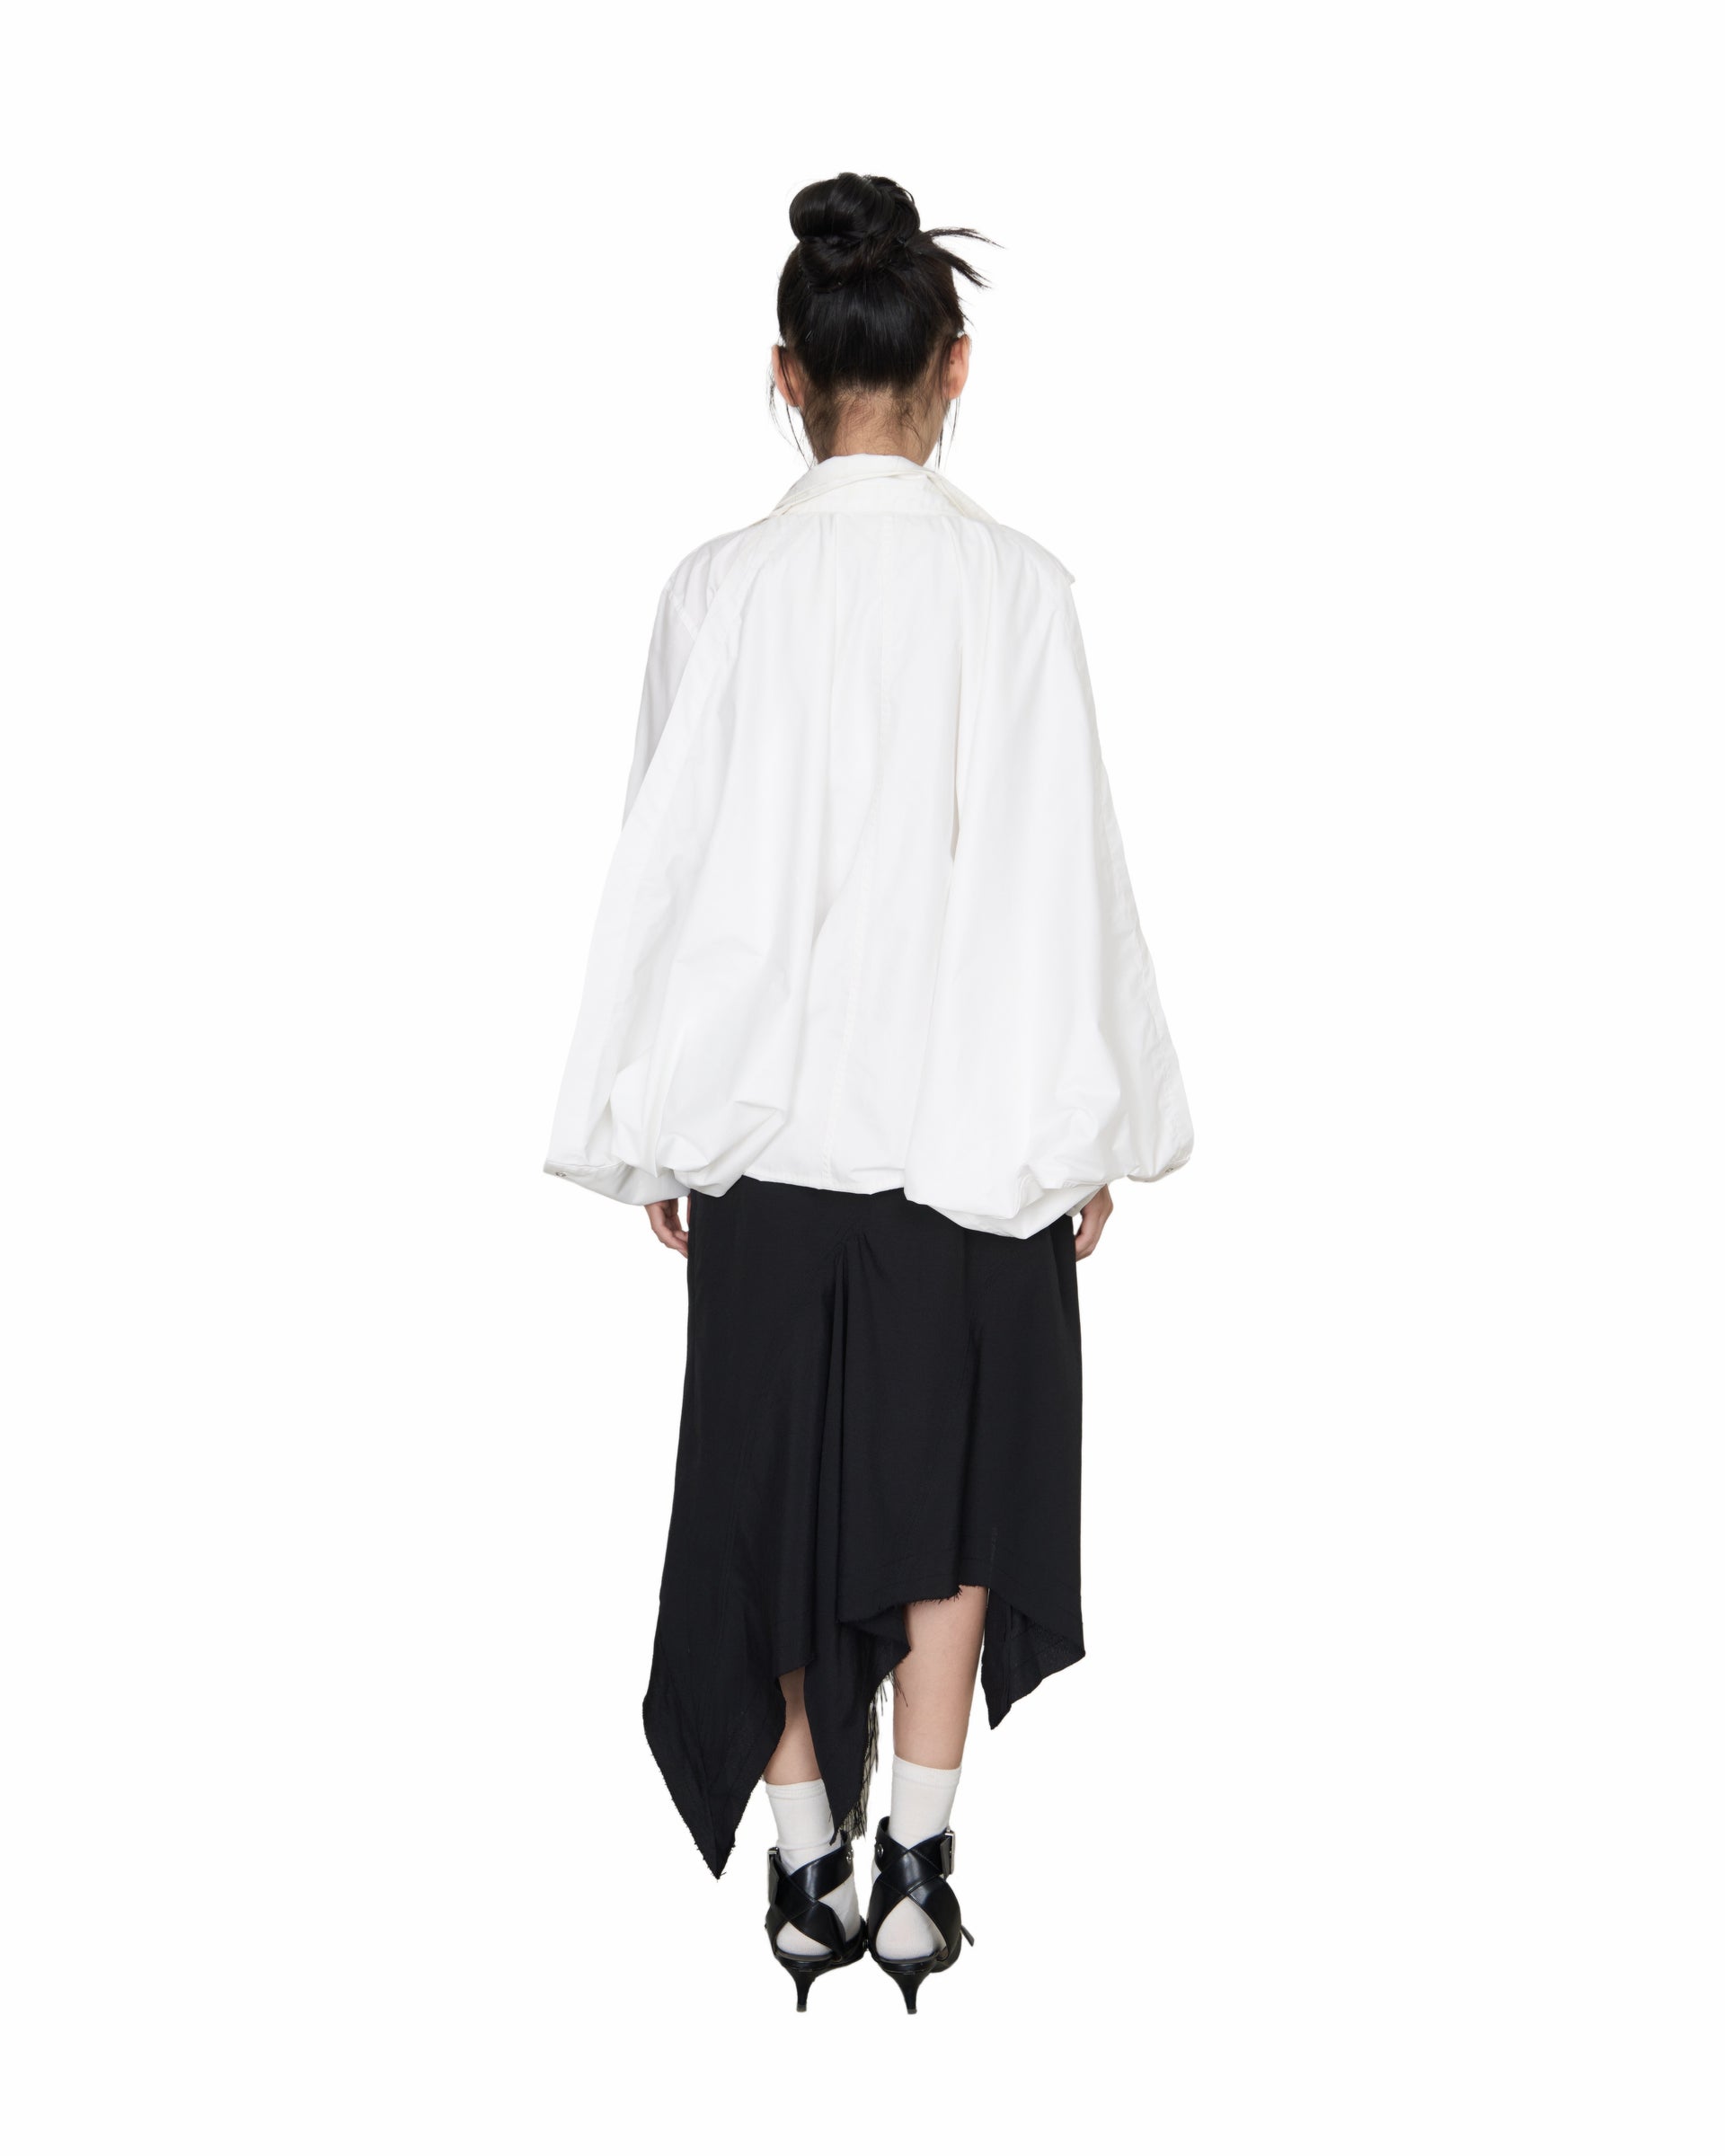 PLOP Panelled Asymmetrical Skirt